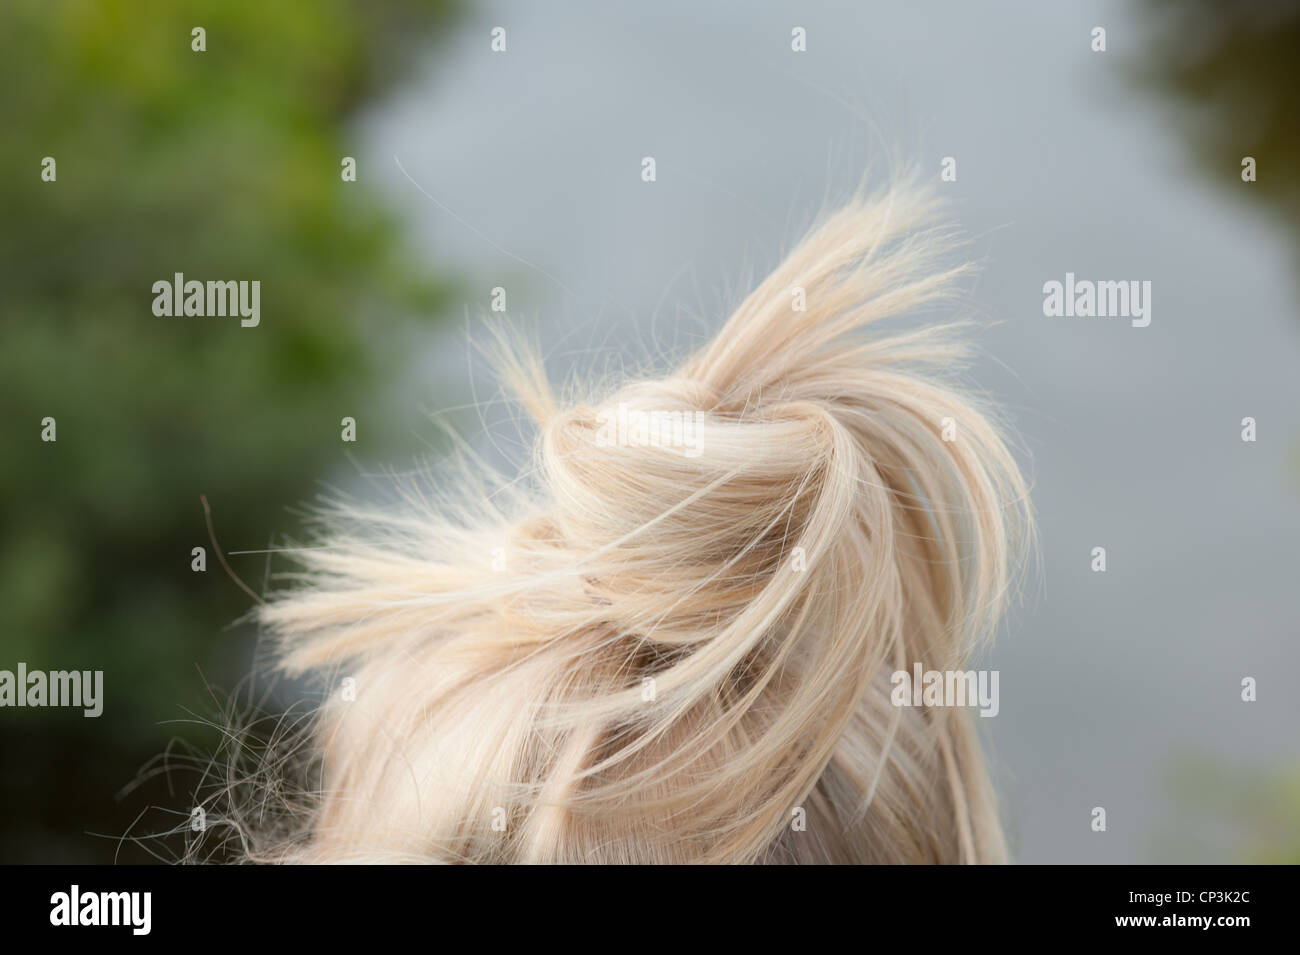 Blonde bun on top of girl's head Stock Photo